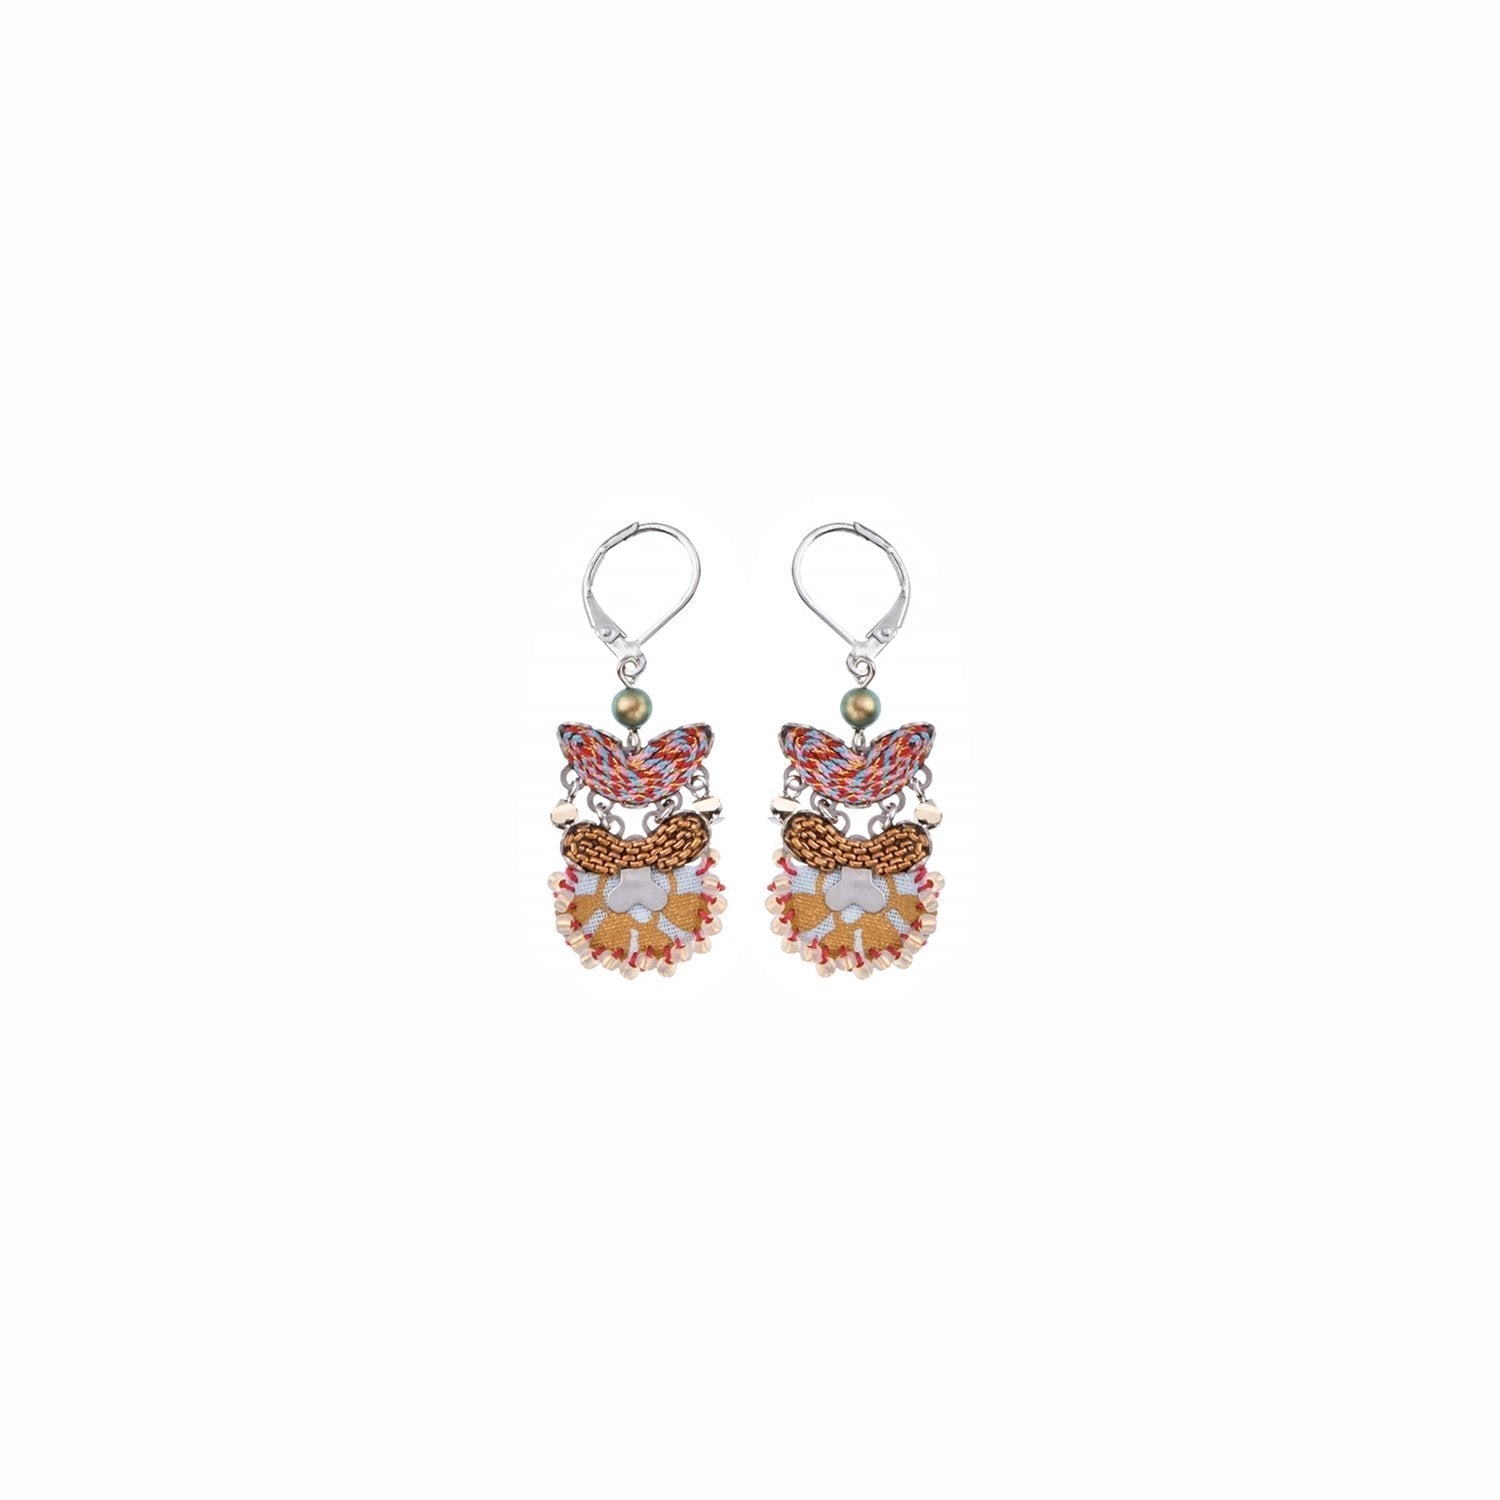 Champagne Minako Earrings - The Nancy Smillie Shop - Art, Jewellery & Designer Gifts Glasgow